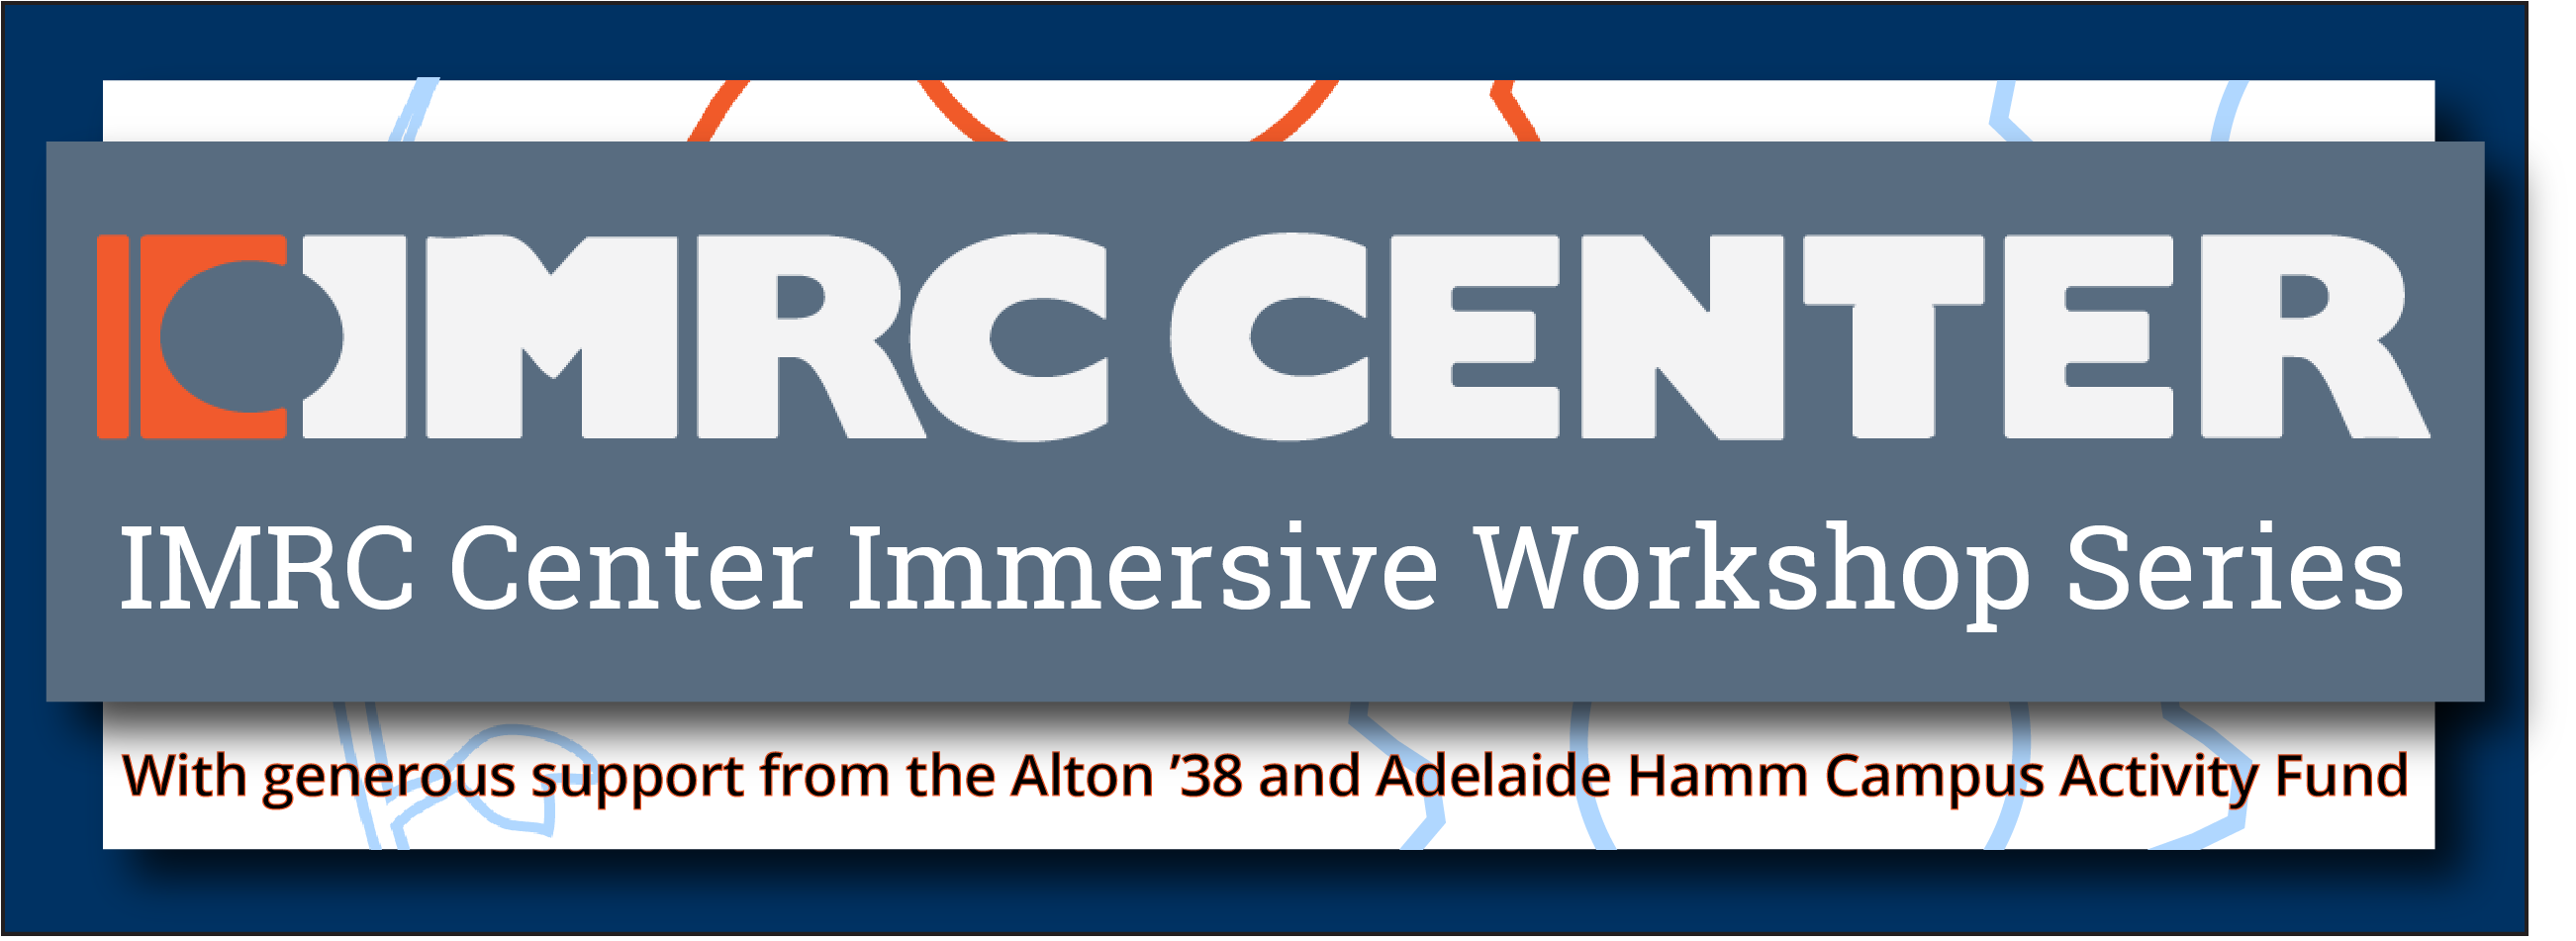 IMRC Center Immersive Workshop Series Banner